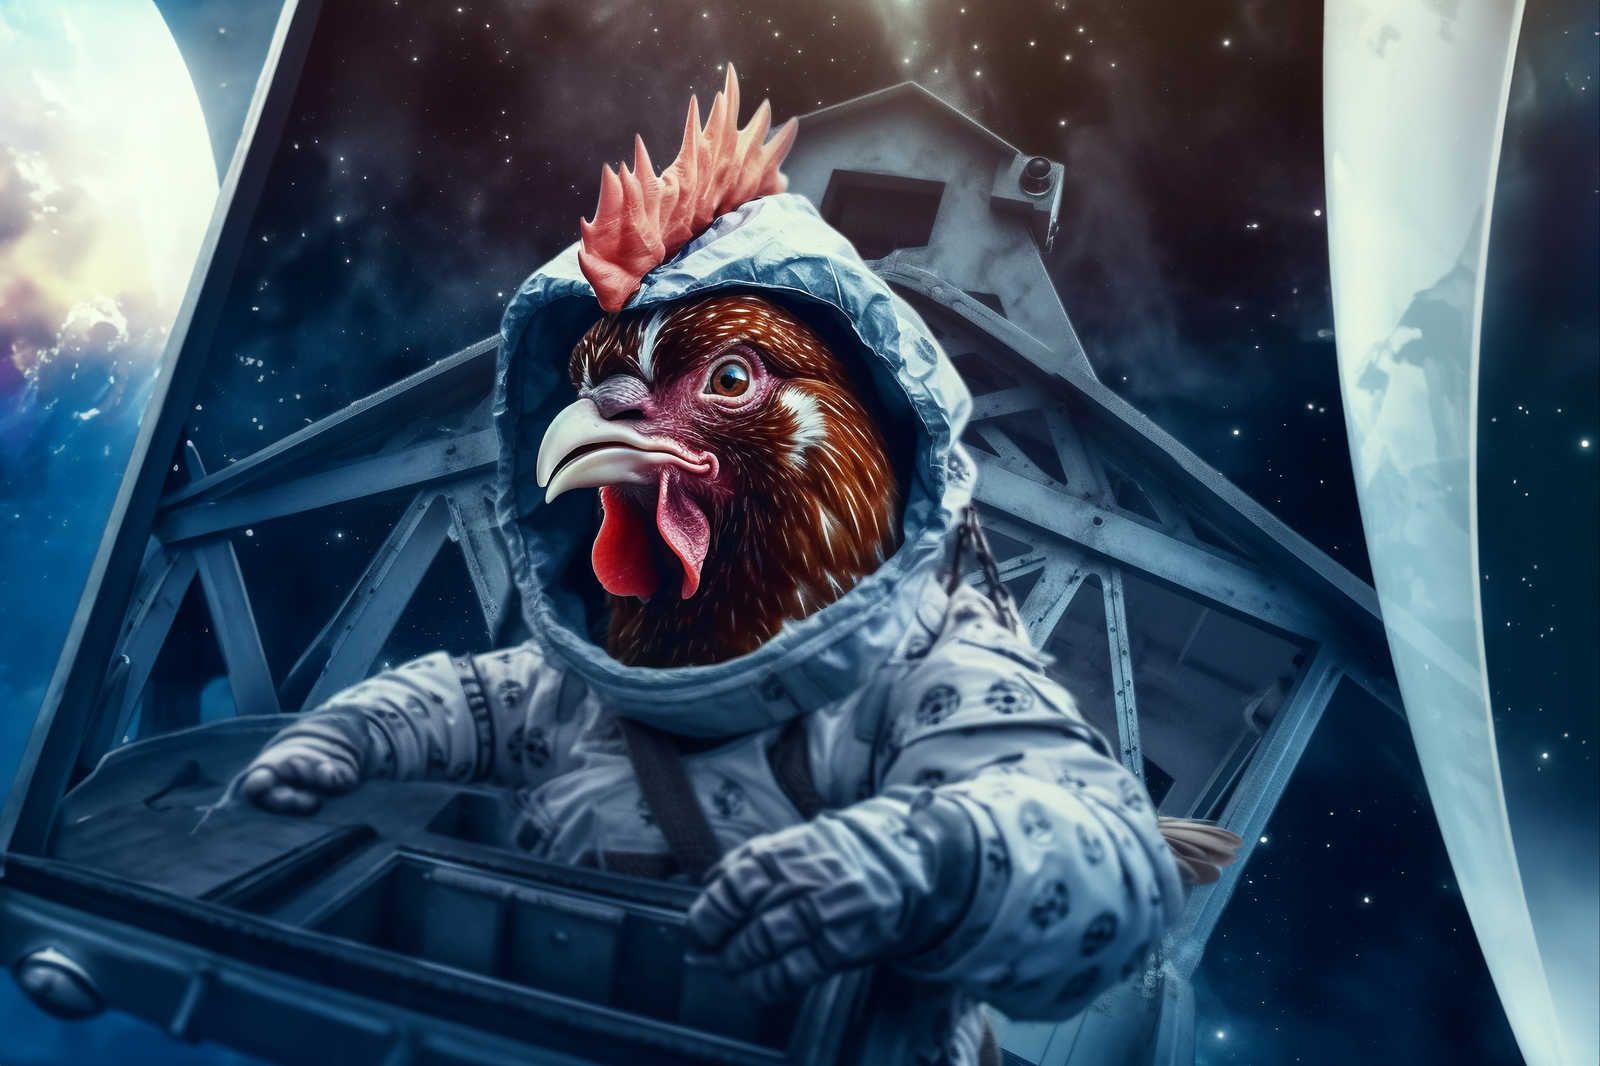             KI Canvas painting »Space Chicken« - 90 cm x 60 cm
        